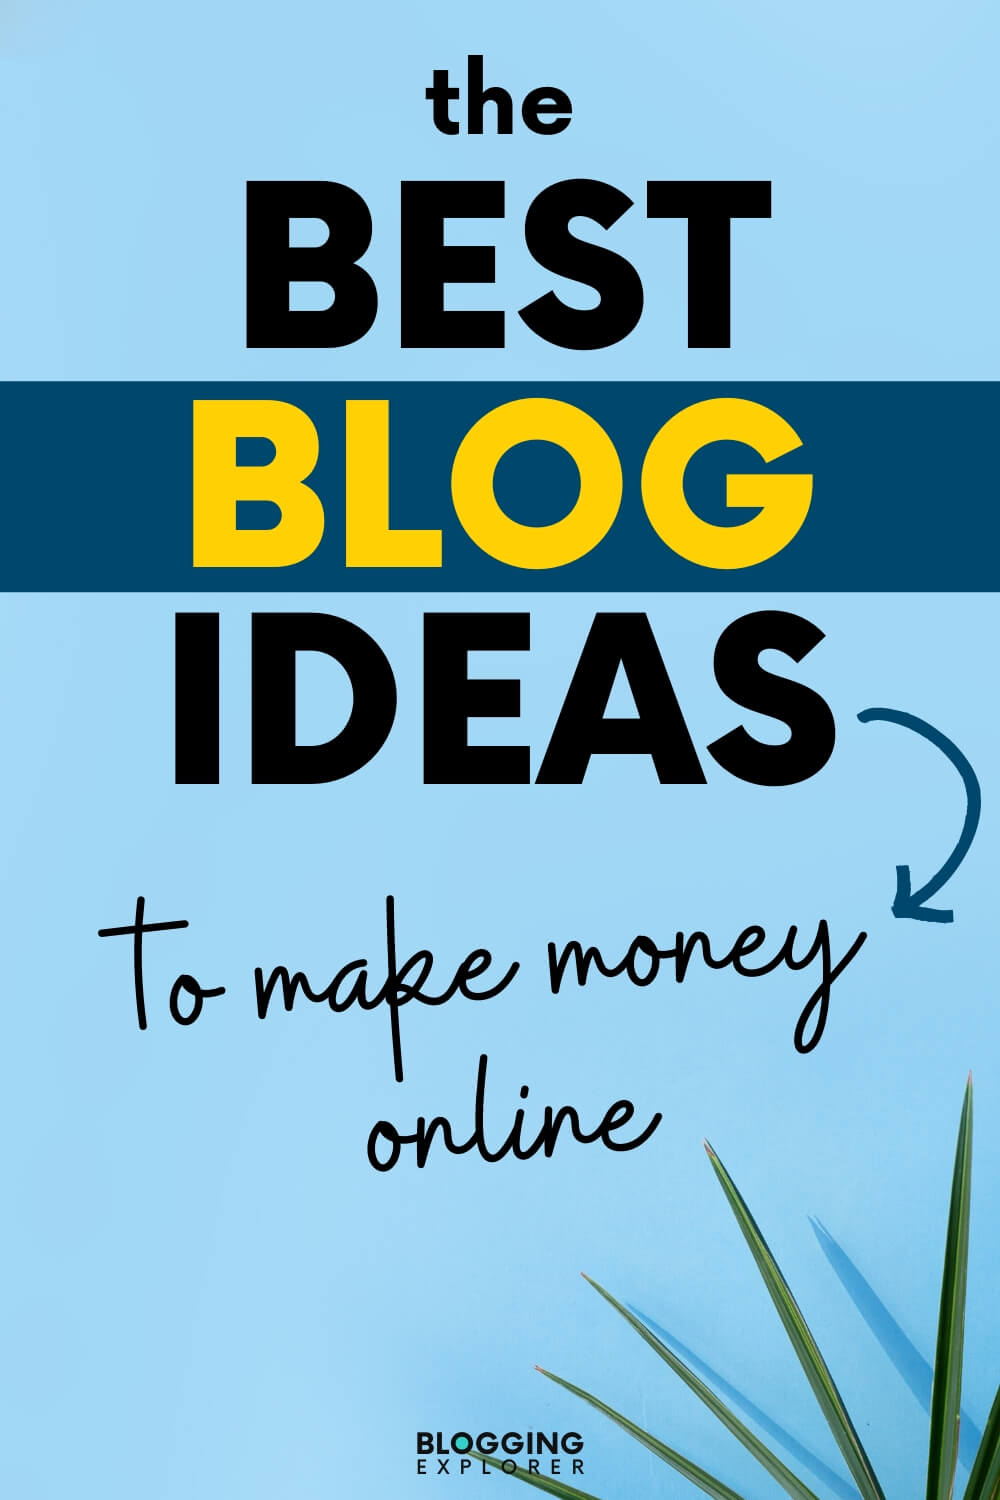 11 Popular Blog Ideas That Make Money in 2021